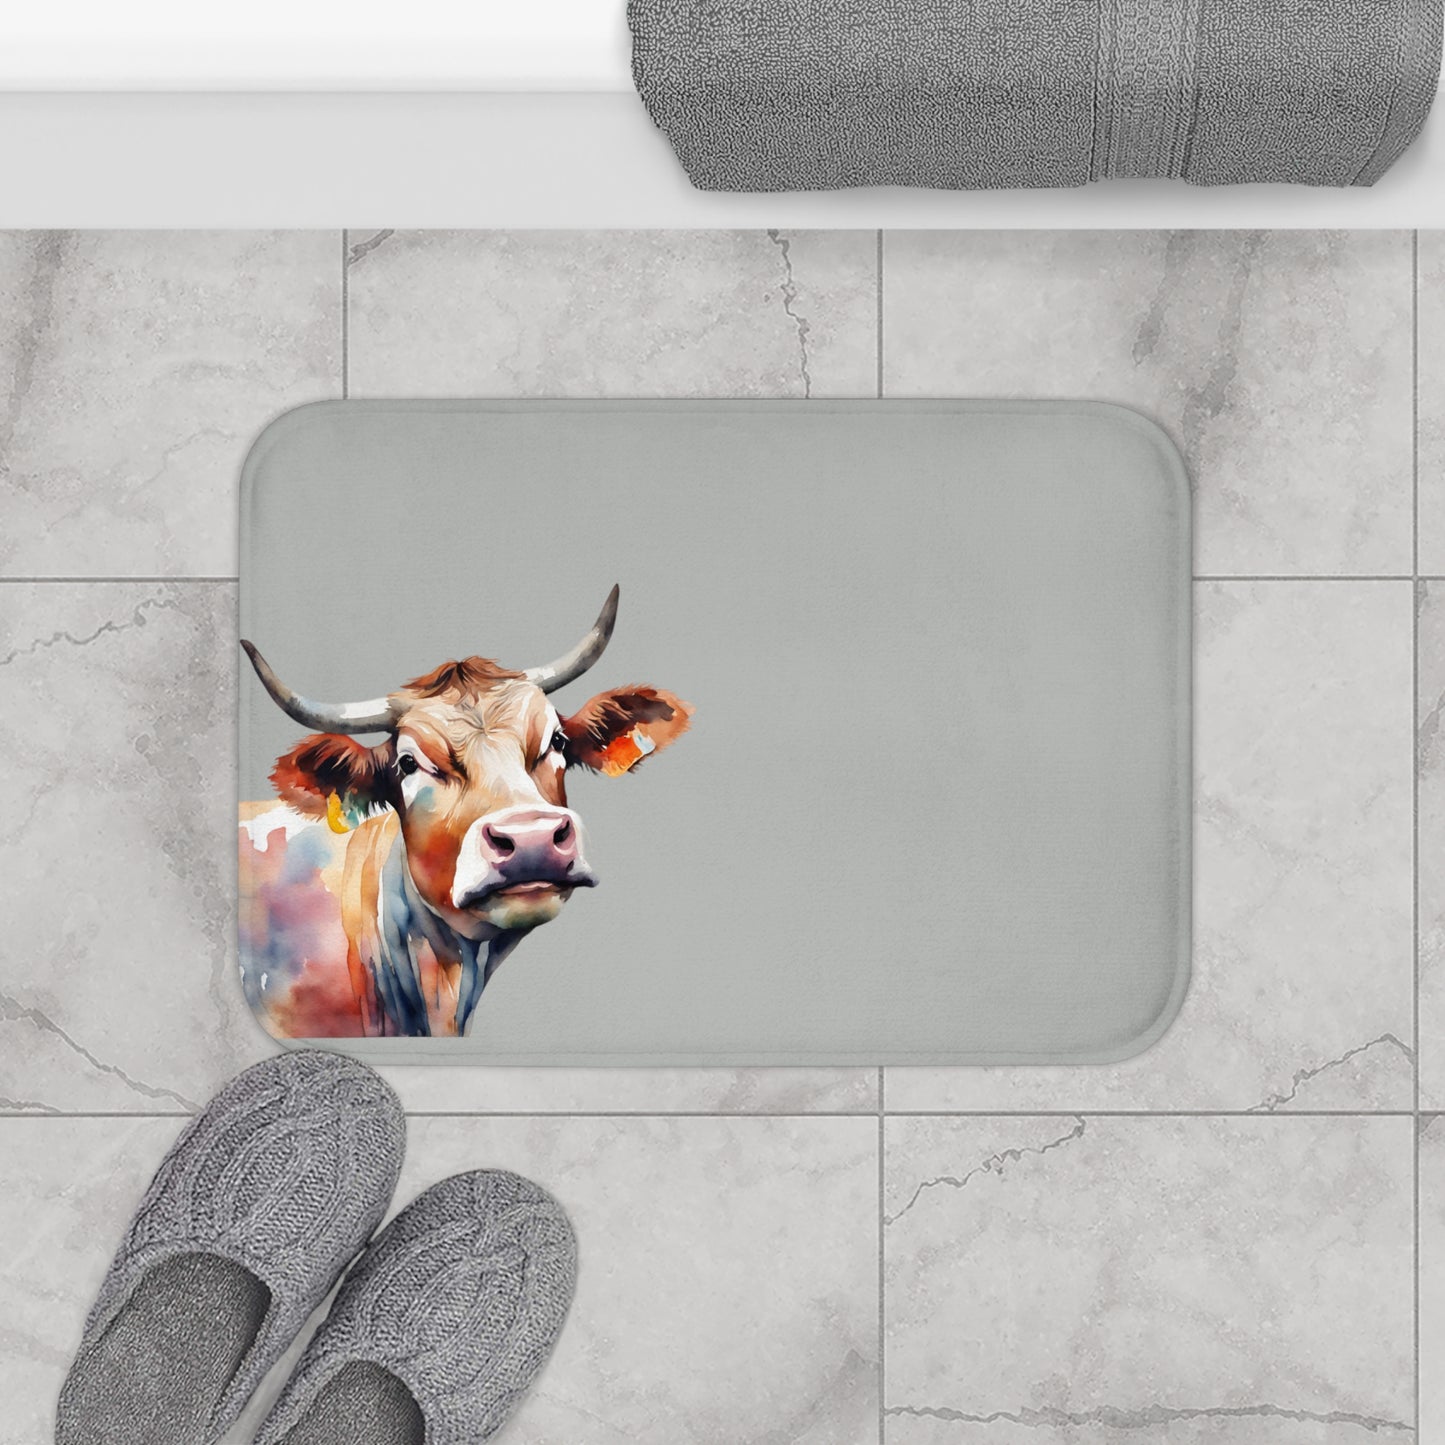 Watercolor Cow In Smoke Bath Mat